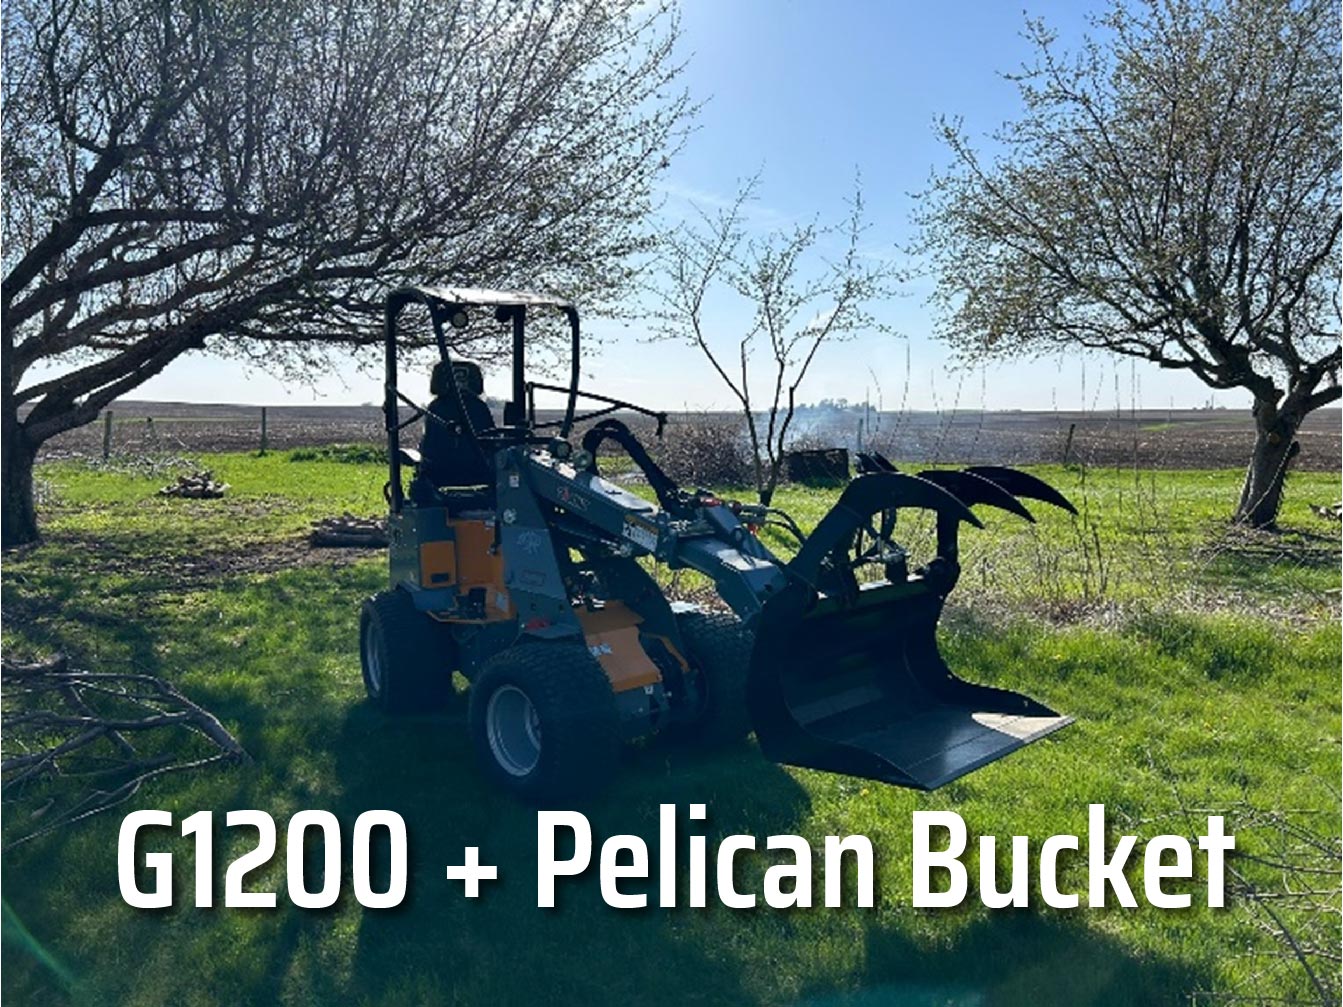 G1200 + Pelican Bucket<br />
Small Tractor Outdoors 